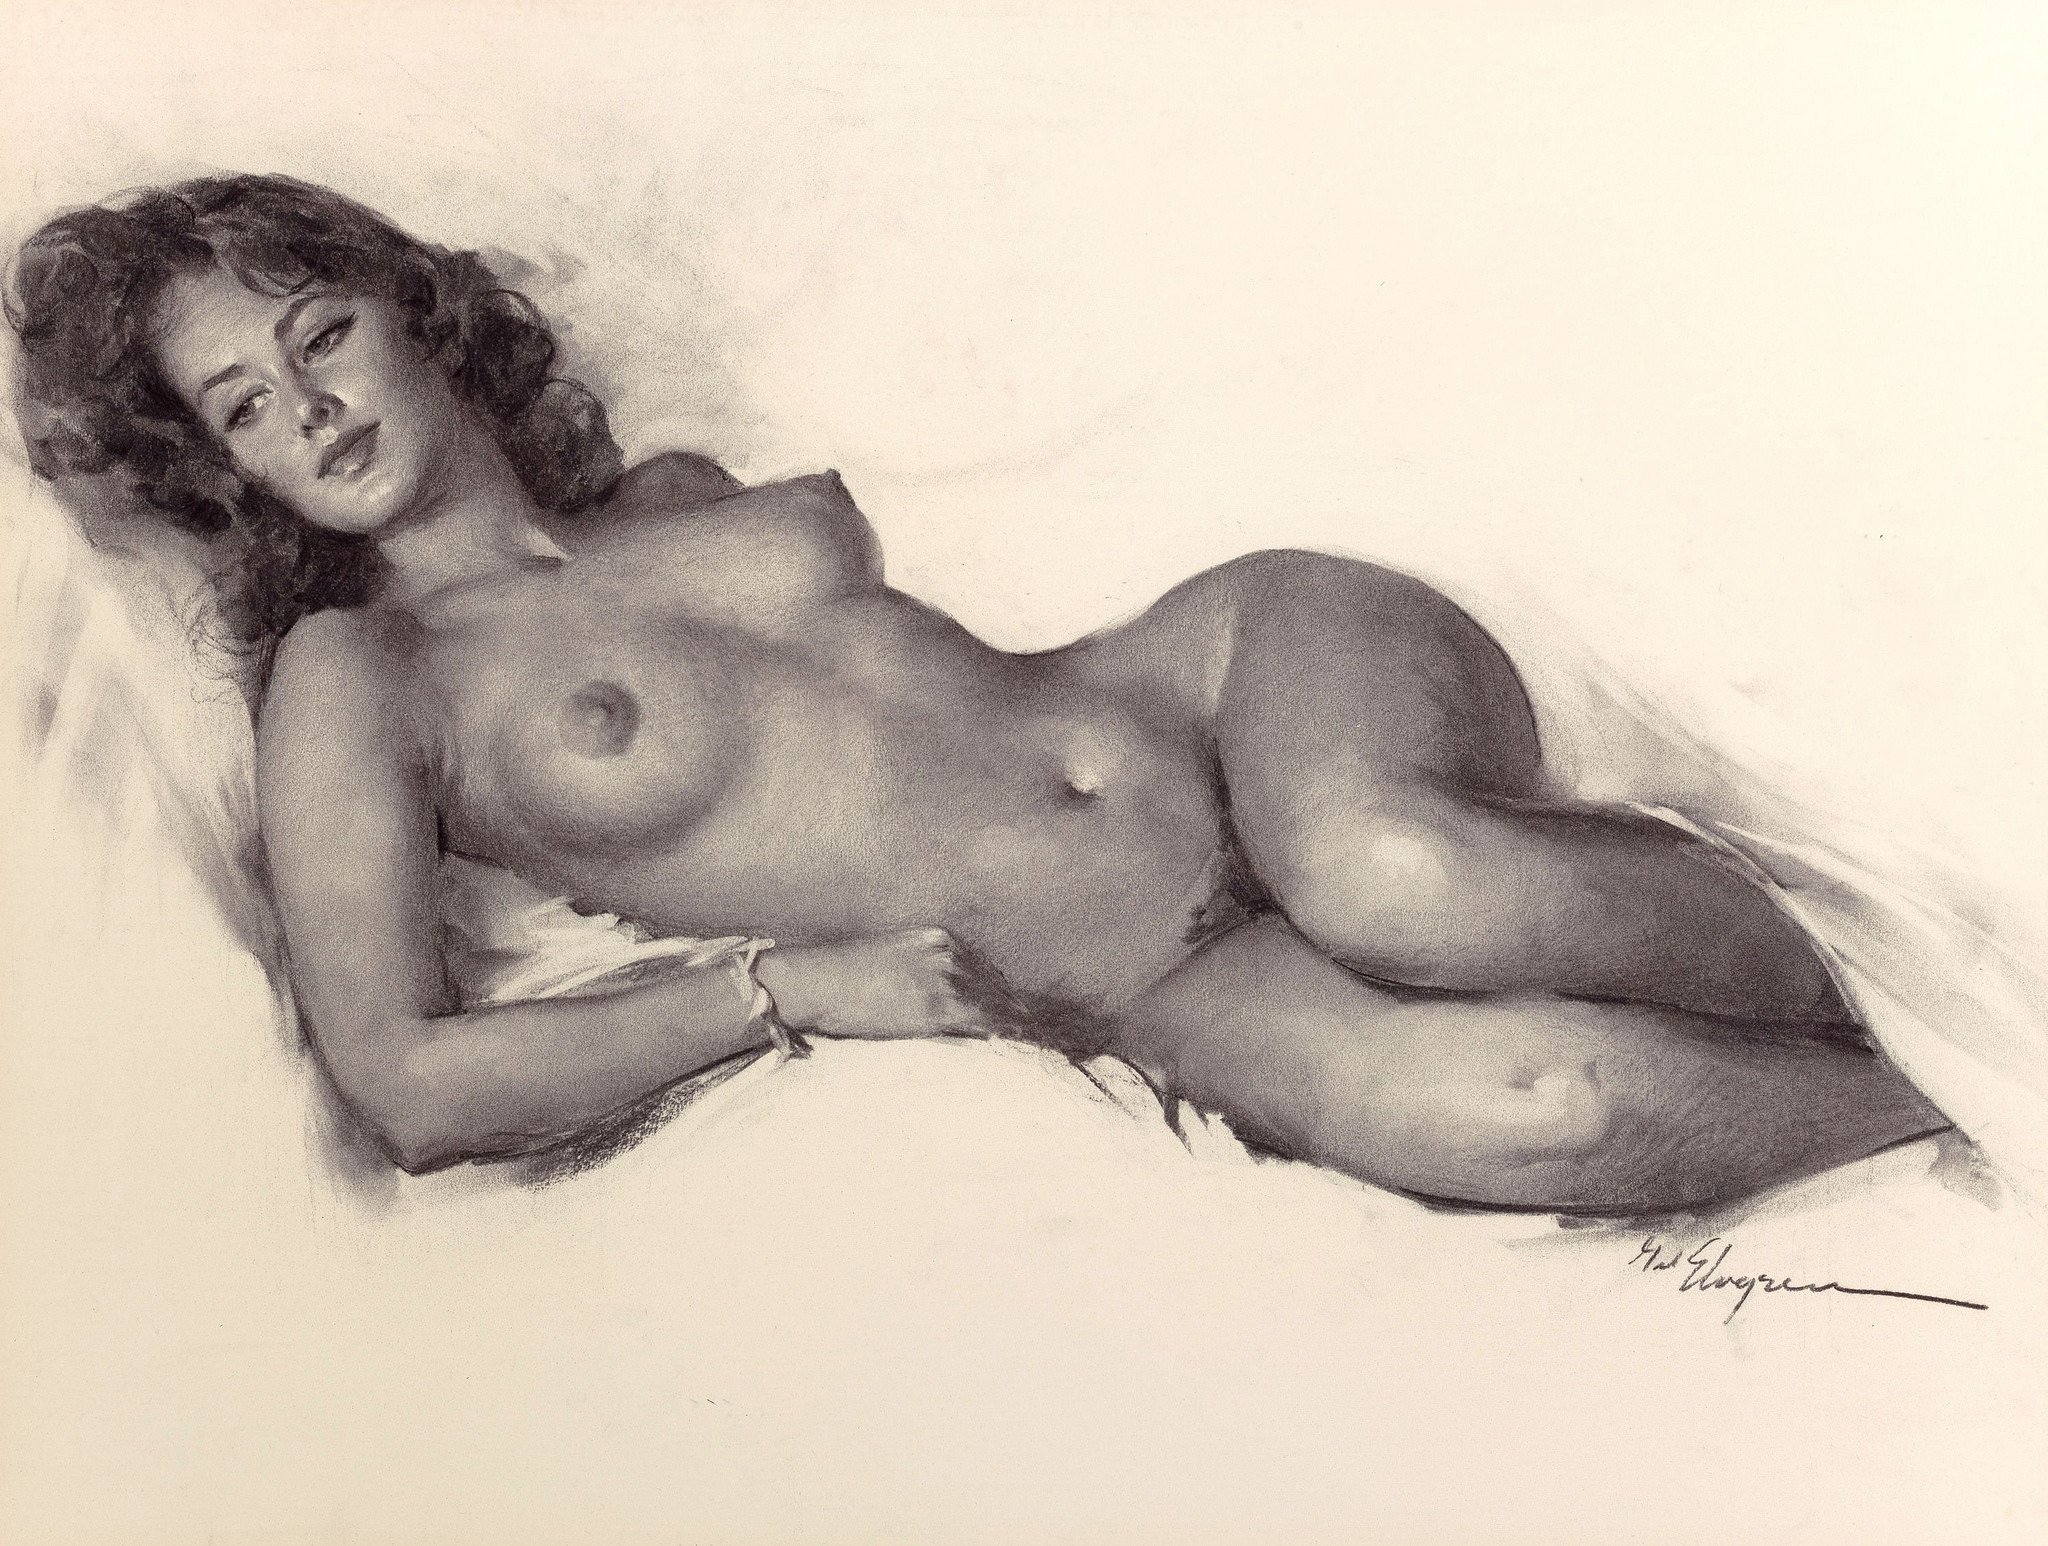 Naked hot girl draw